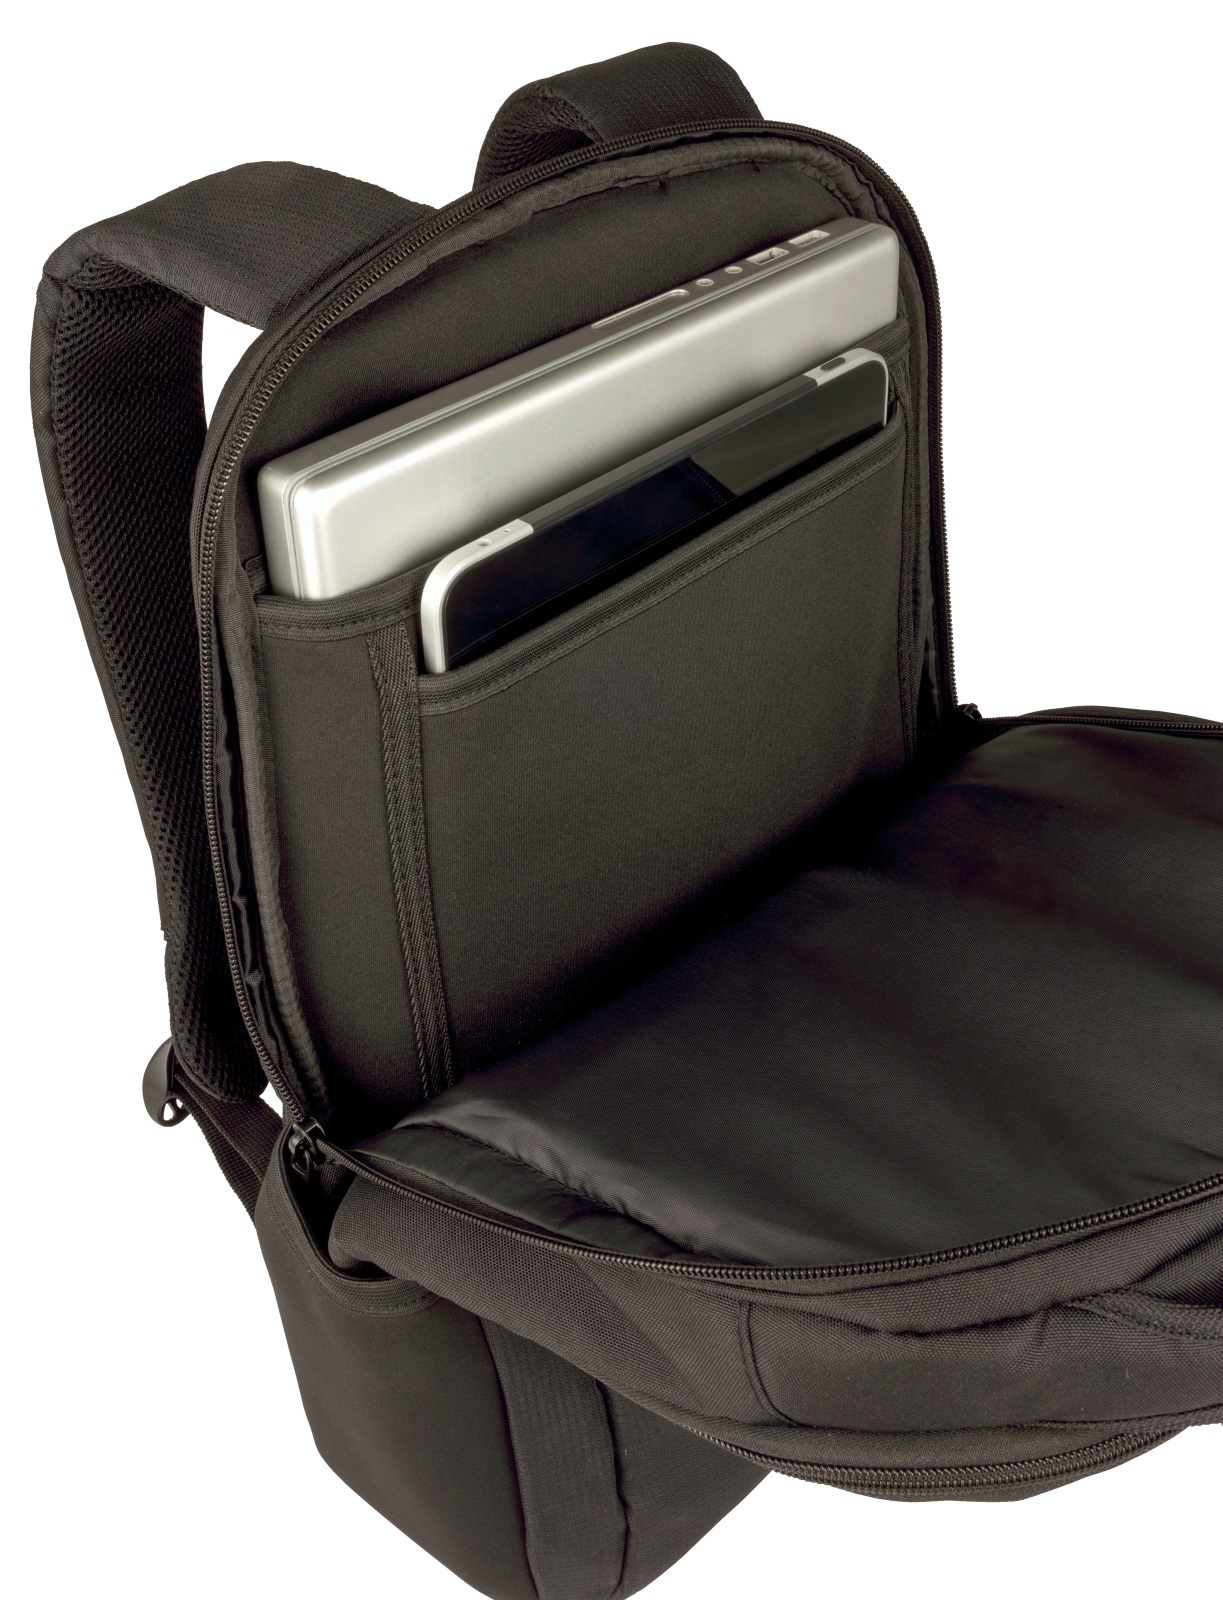 Wenger Surge 15.6-inch Laptop Backpack 